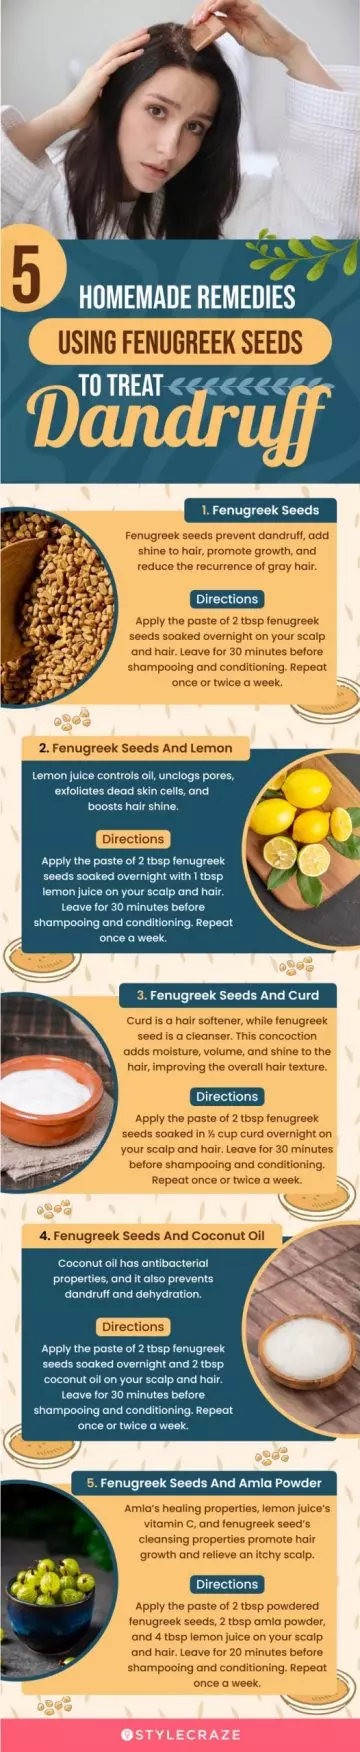 5 homemade remedies of fenugreek seeds to treat dandruff (infographic)